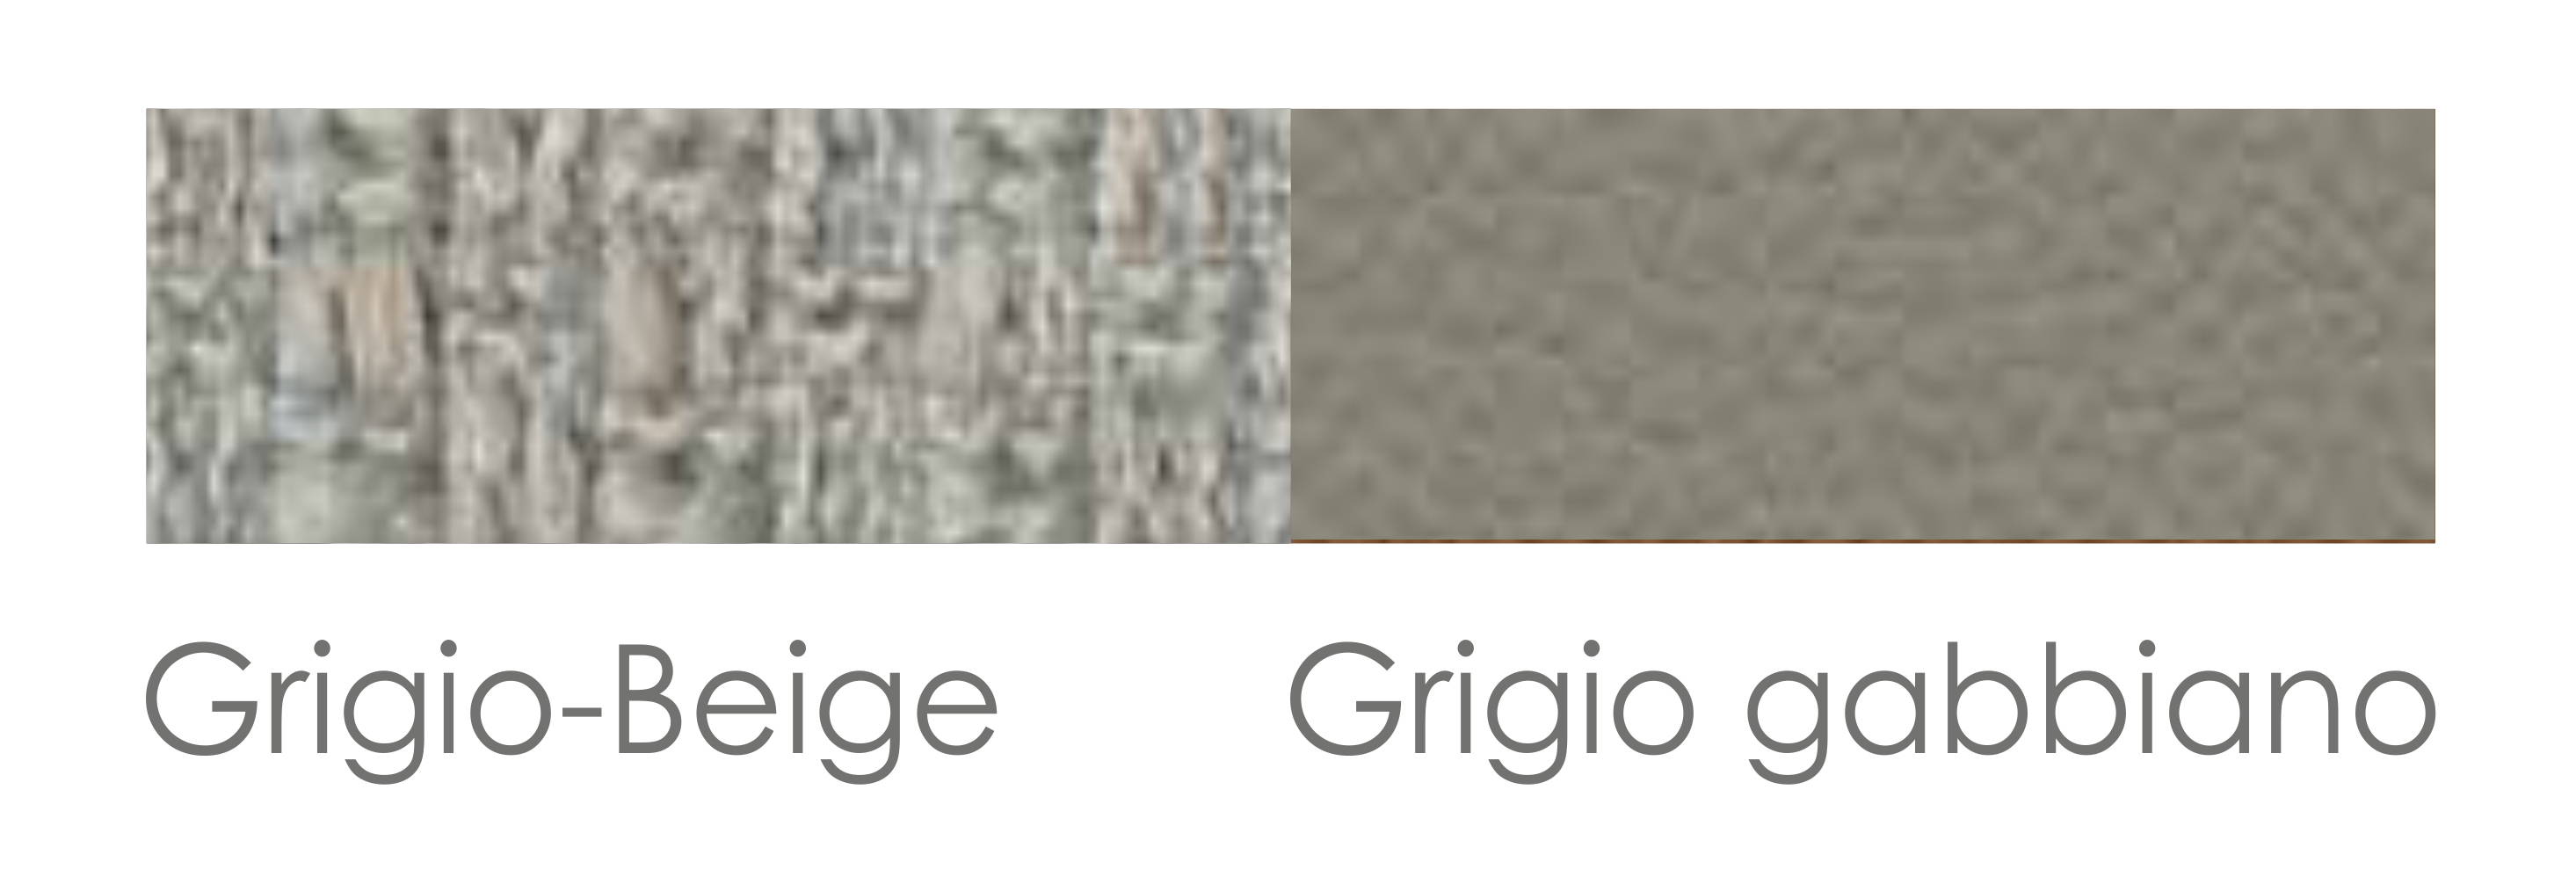 Комбинация: Grigio chiaro beige / Grigio gabbiano